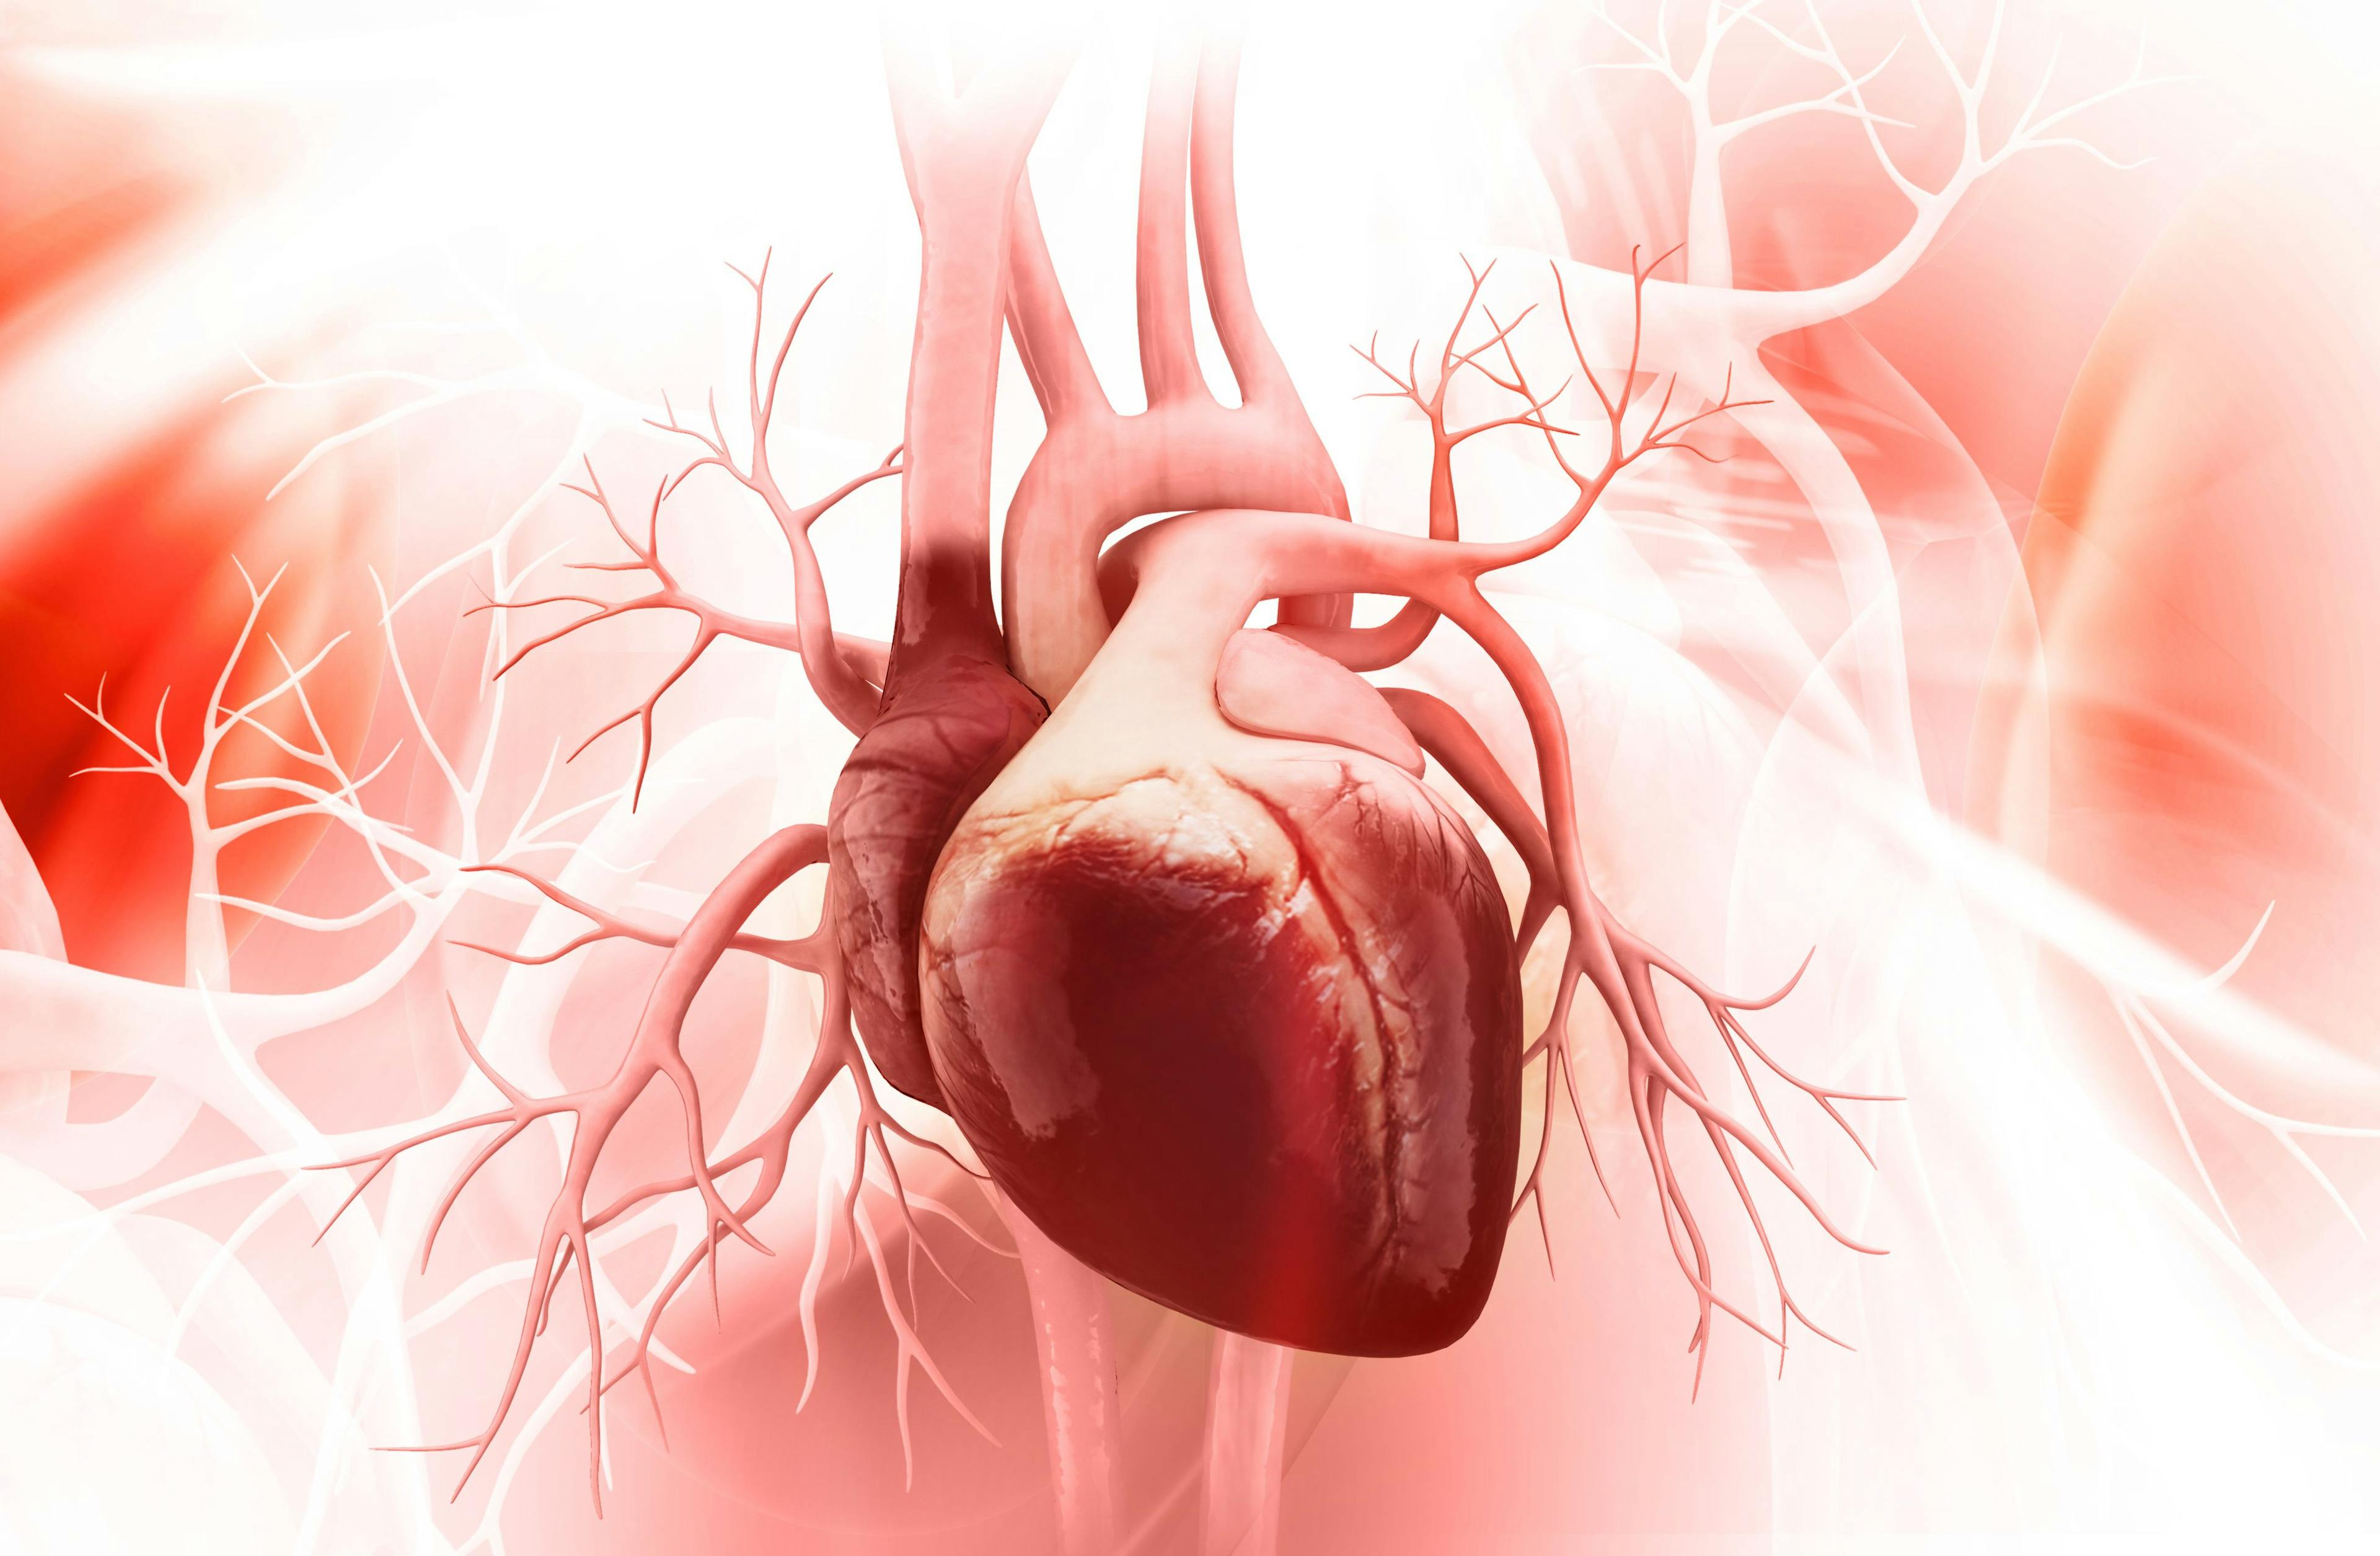 Aficamten Shows Potential for Hypertrophic Cardiomyopathy in REDWOOD-HCM